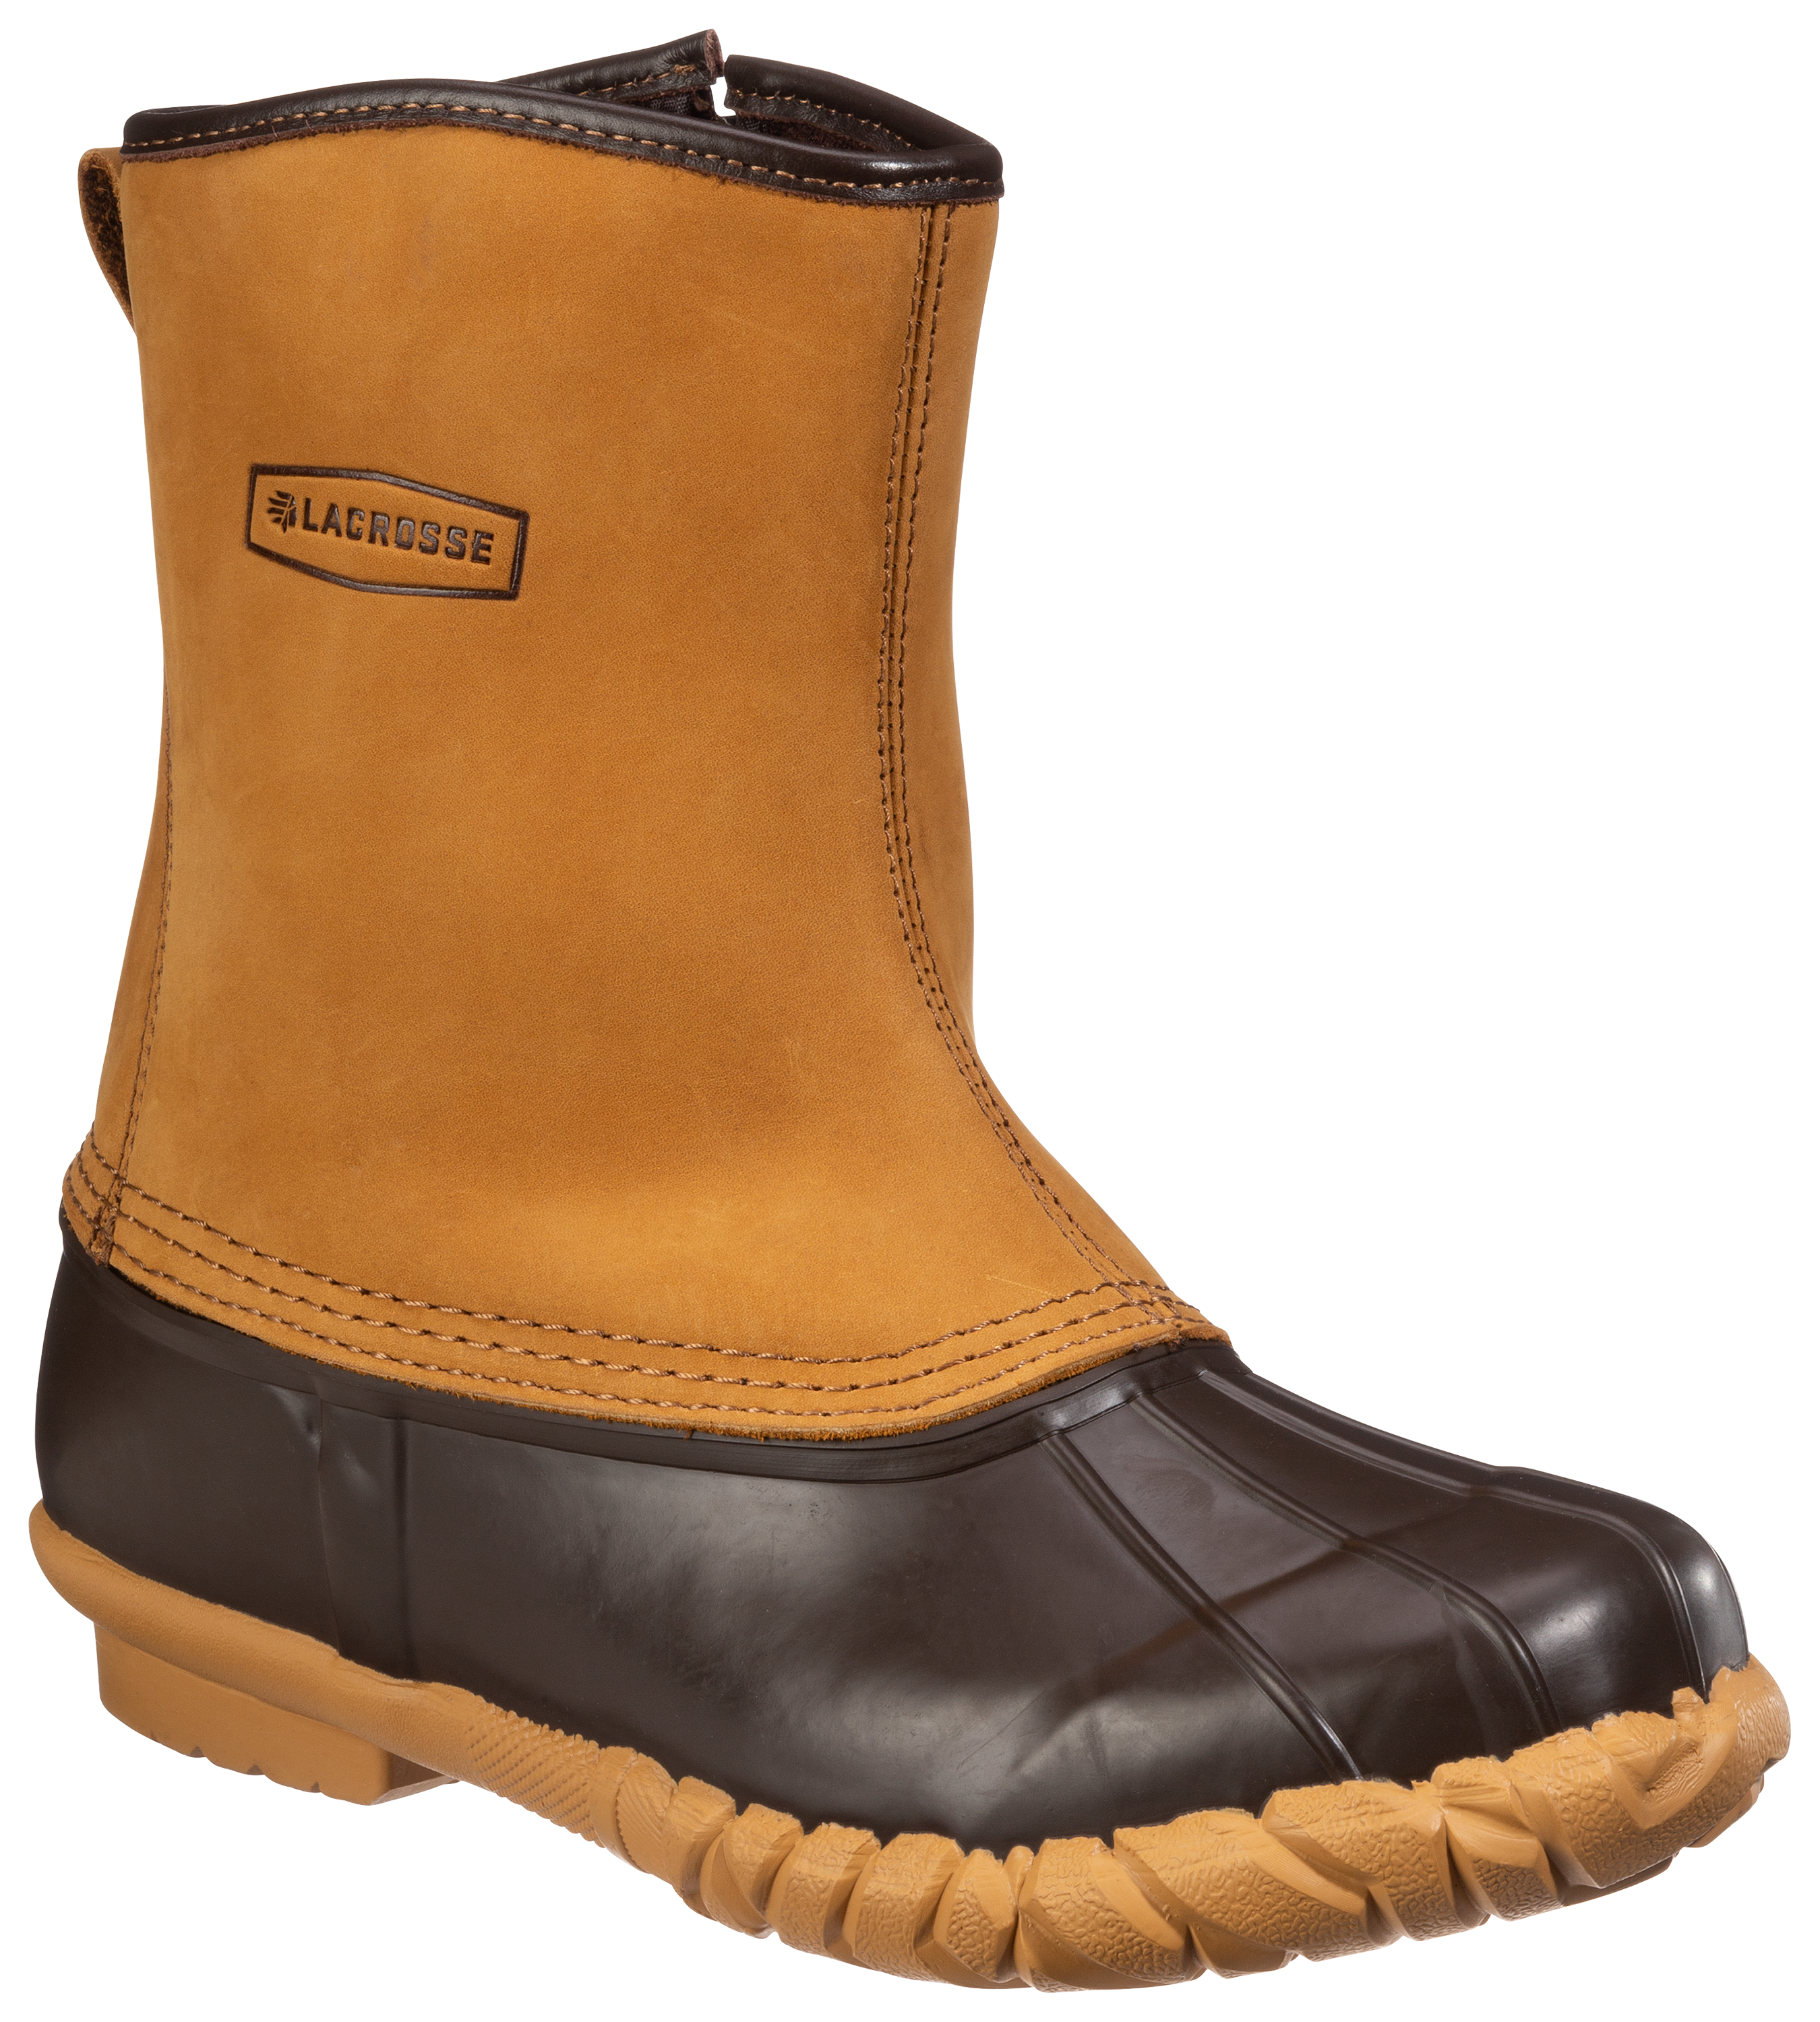 LaCrosse Mesquite II Insulated Waterproof Side-Zip Boots for Men - Brown - 11M